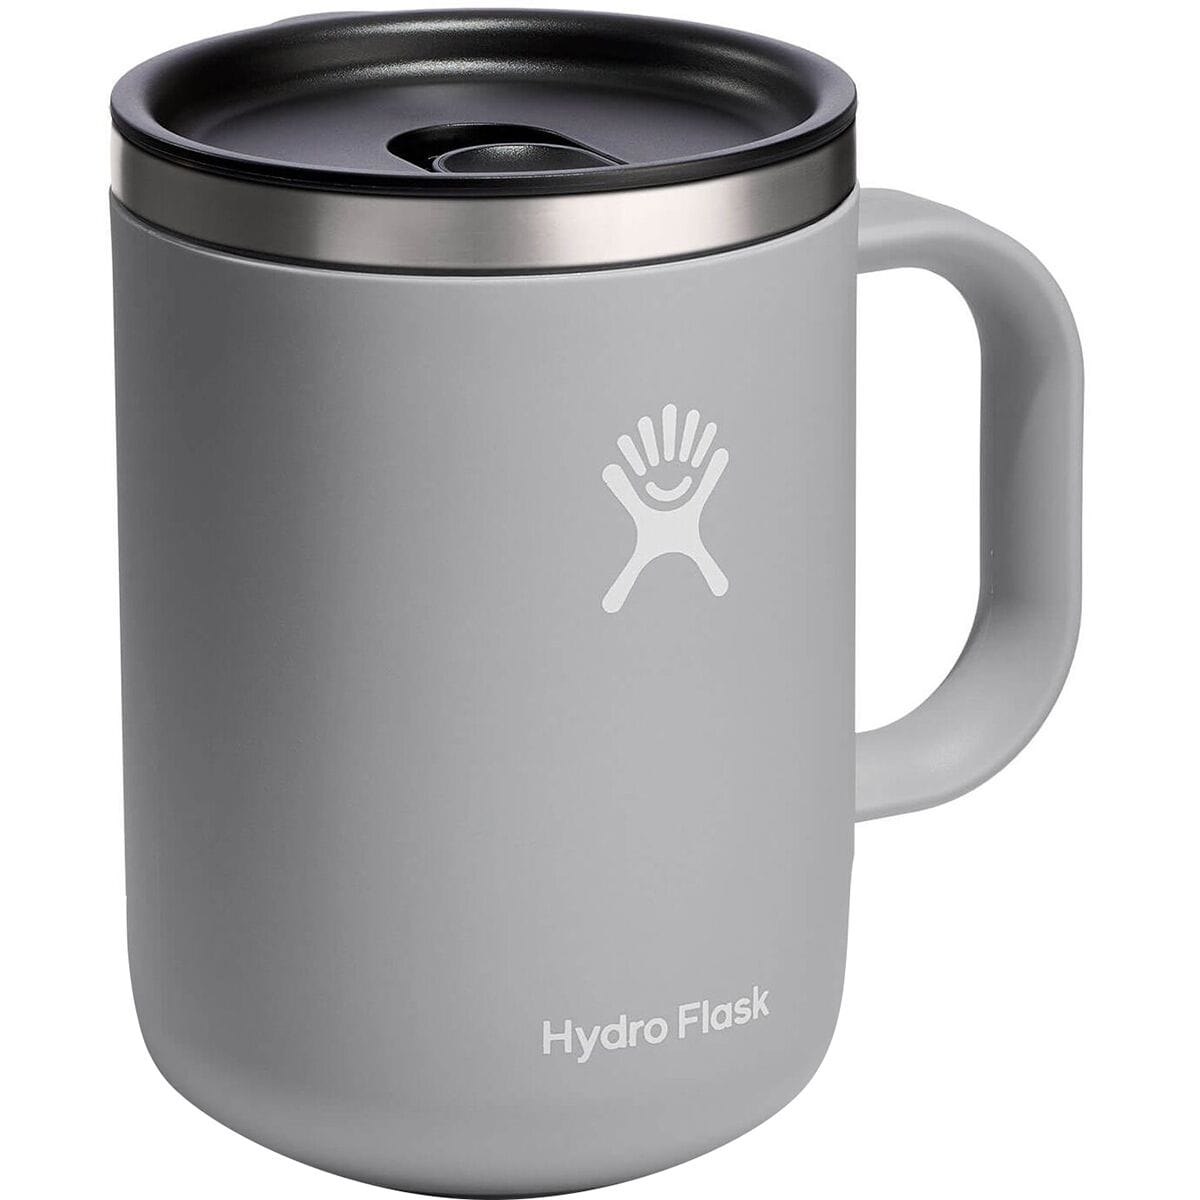 Hydro Flask 24oz Coffee Mug - Hike & Camp